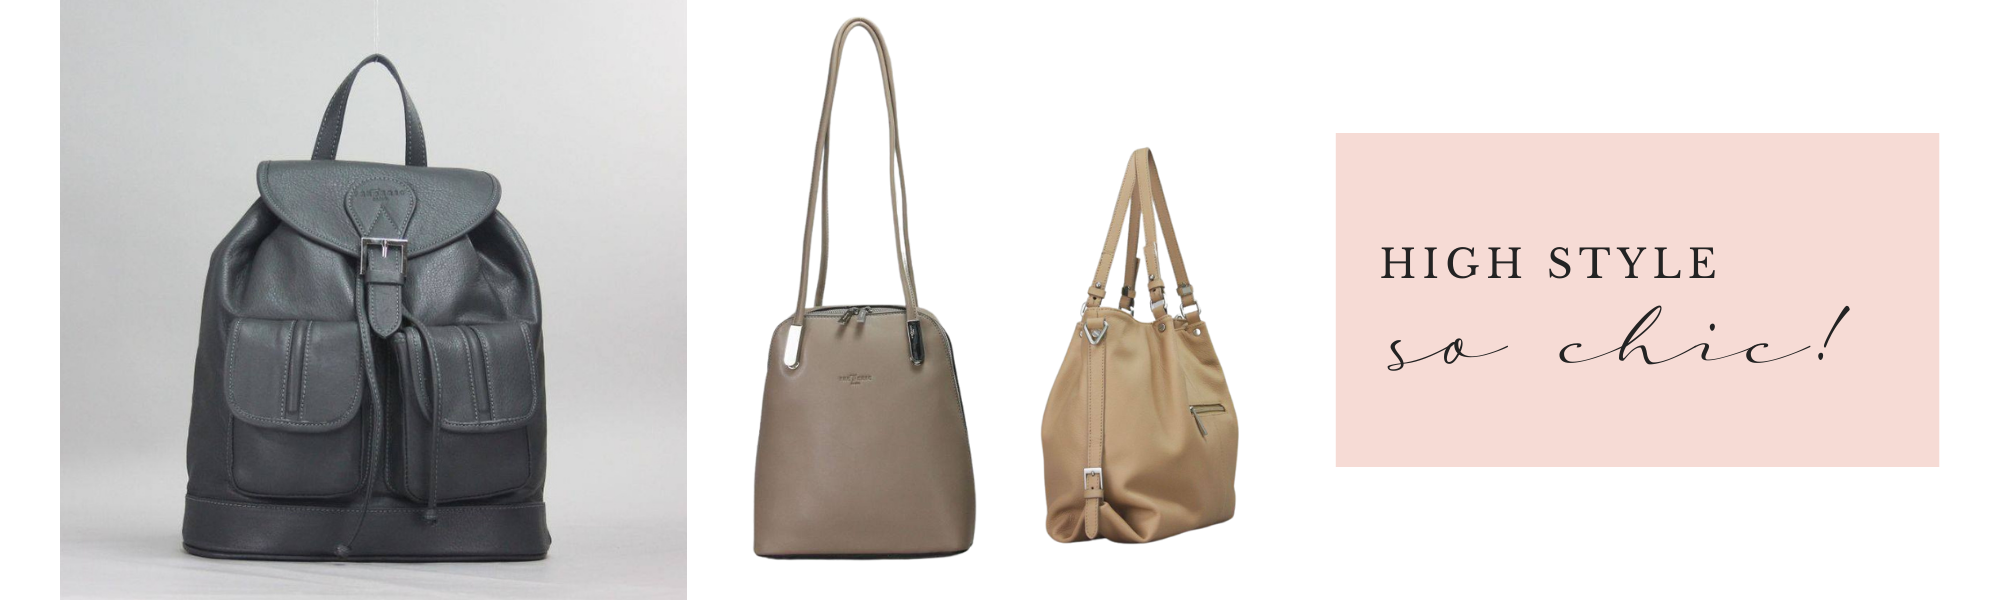 designer handbags and purses 